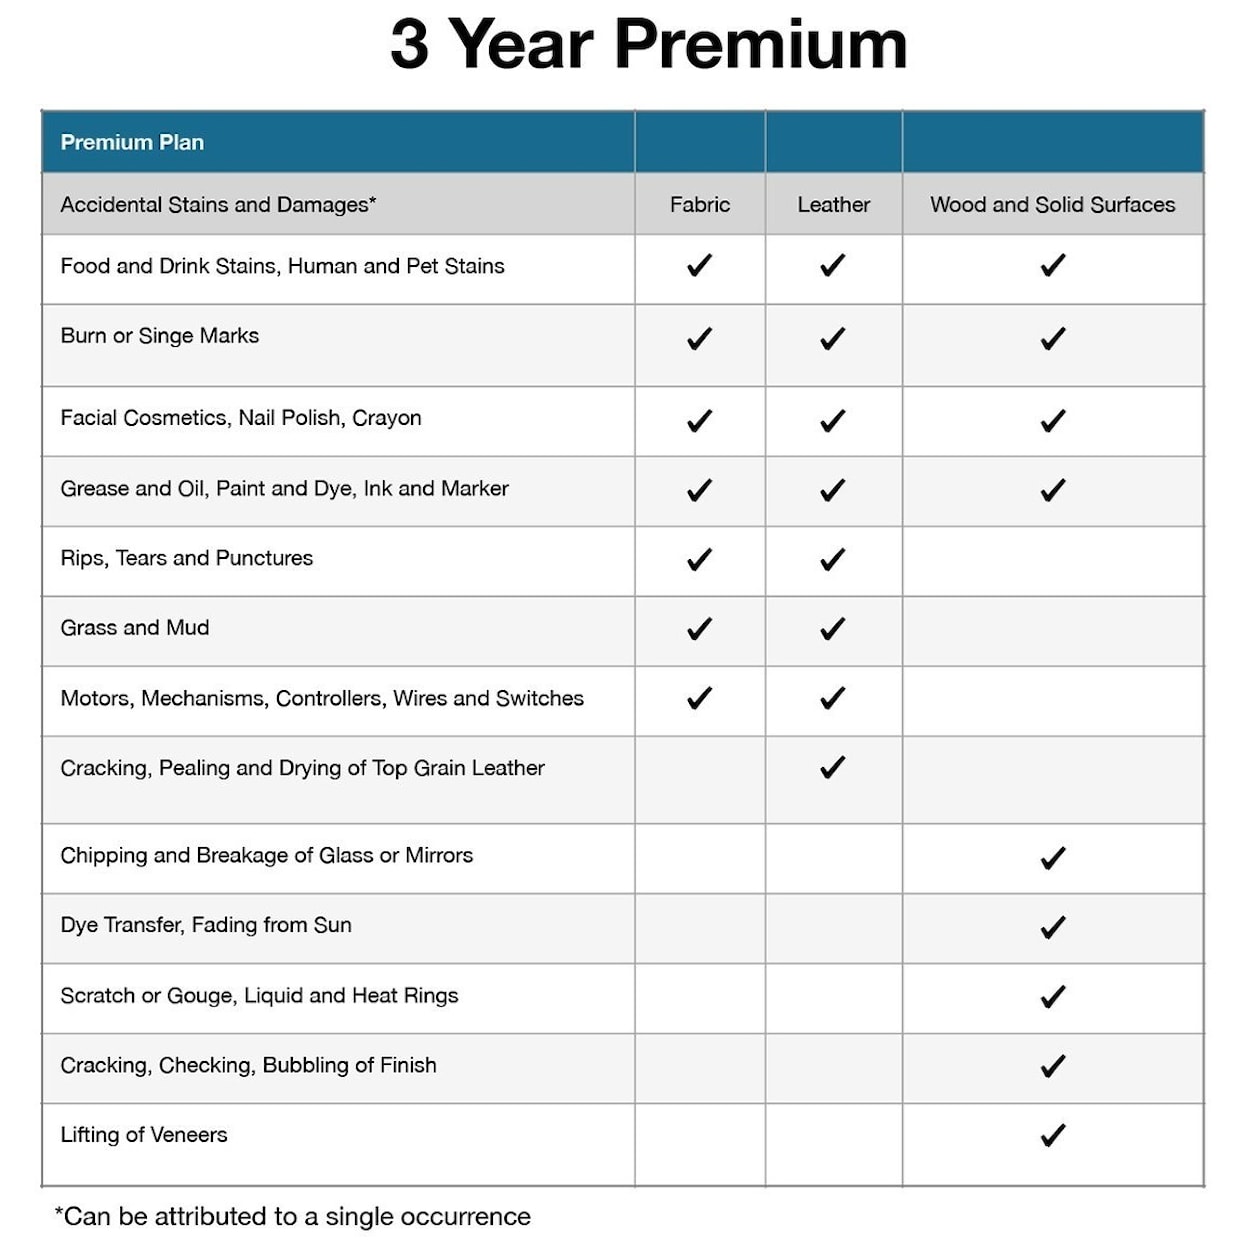 Sam Levitz Premium Protection Plan $3500-$4999 3 Year Protection Plan